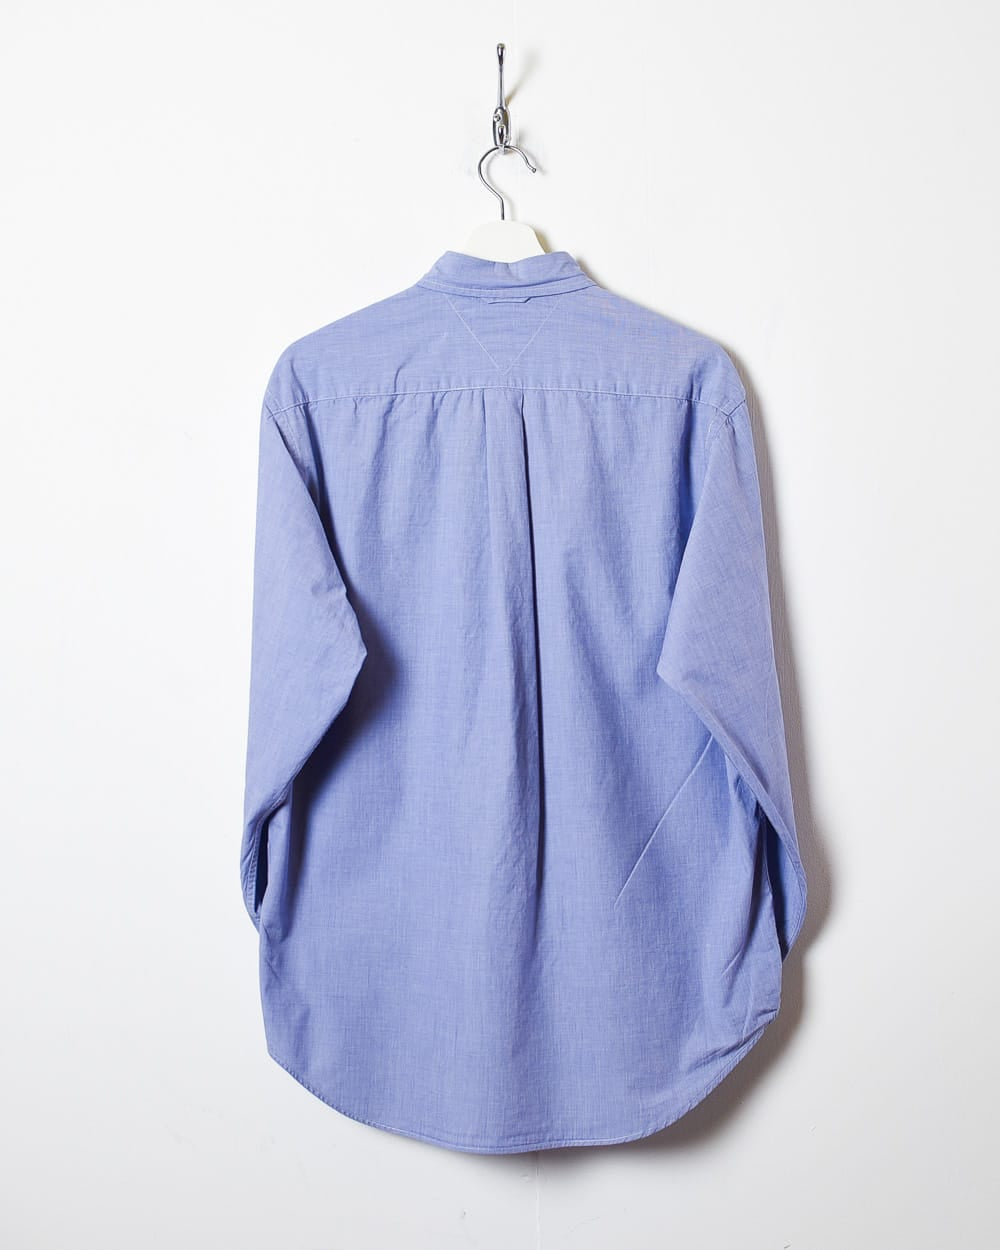 Blue Tommy Hilfiger Shirt - Medium